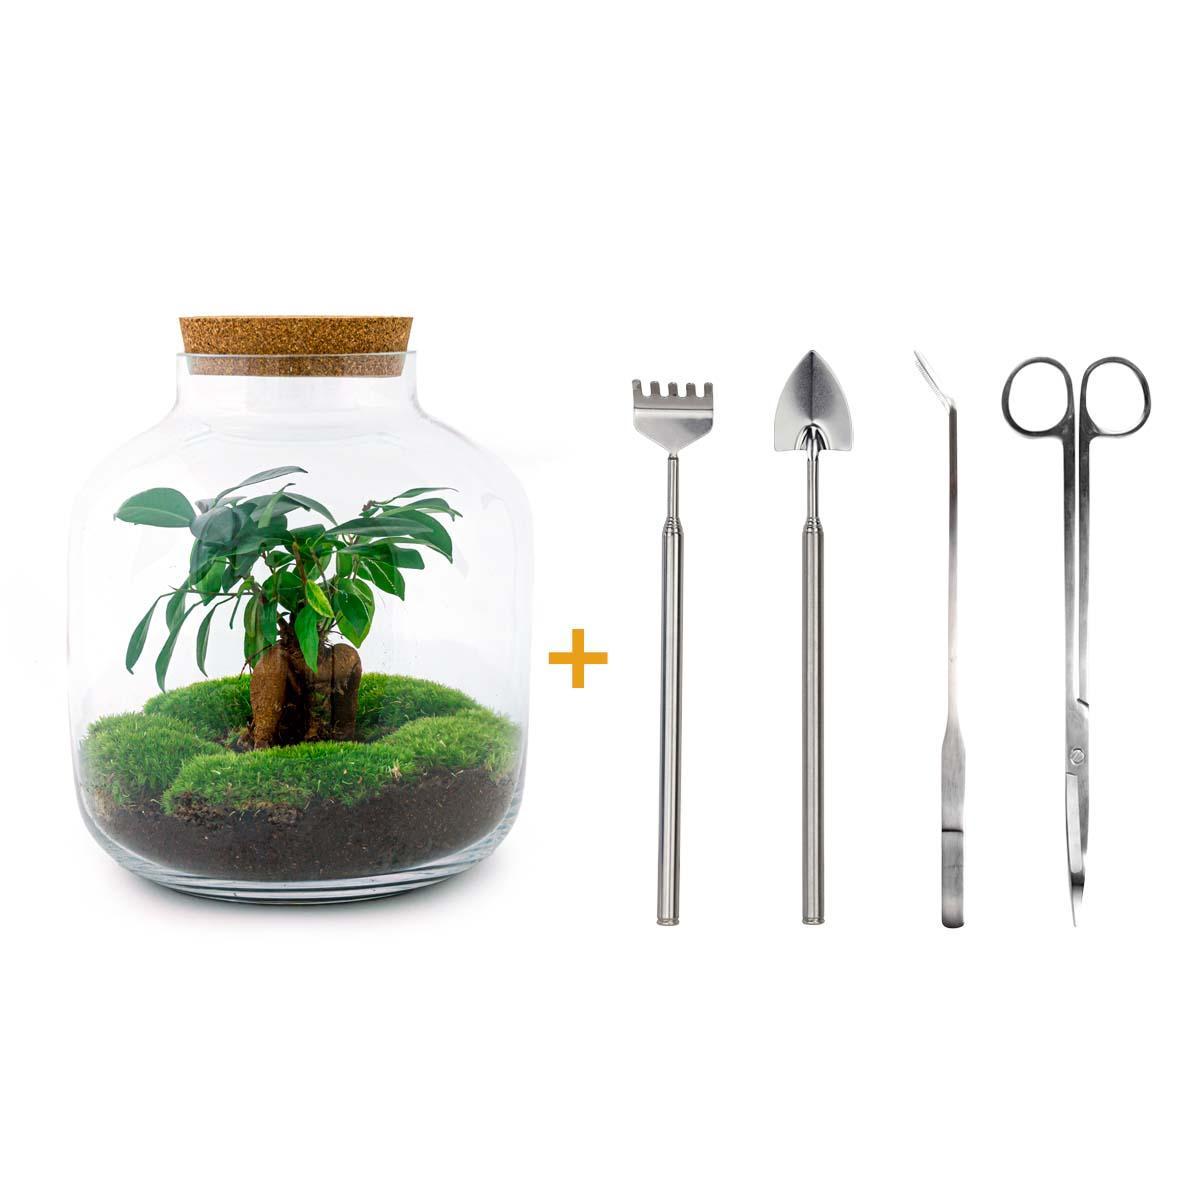 DIY terrarium - Billie - ↑ 29 cm + Rake + Shovel + Tweezer + Scissors